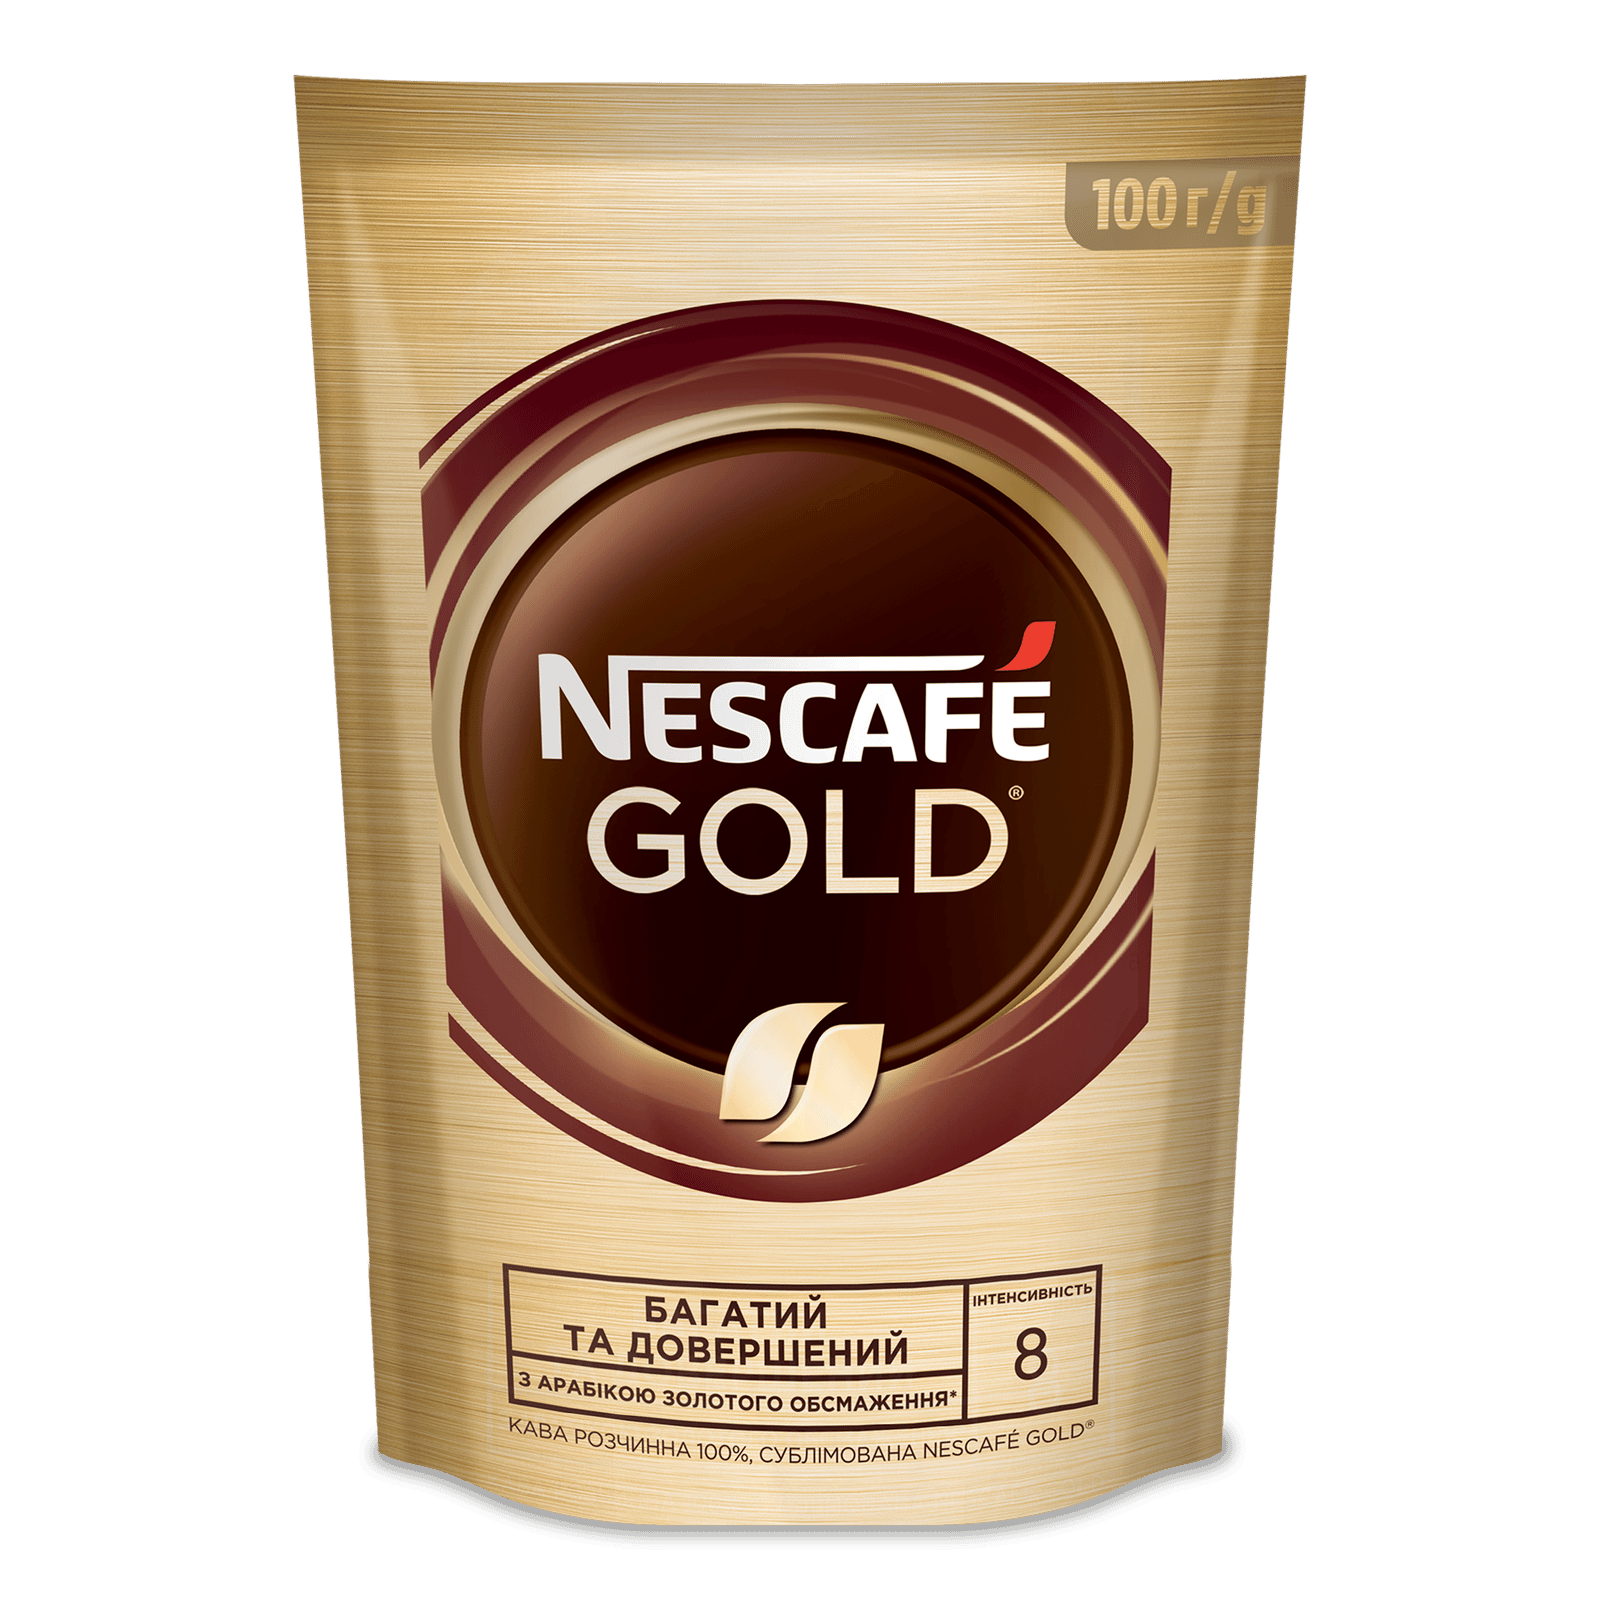 Кава розчинна Nescafe Gold сублімована д/п - 1